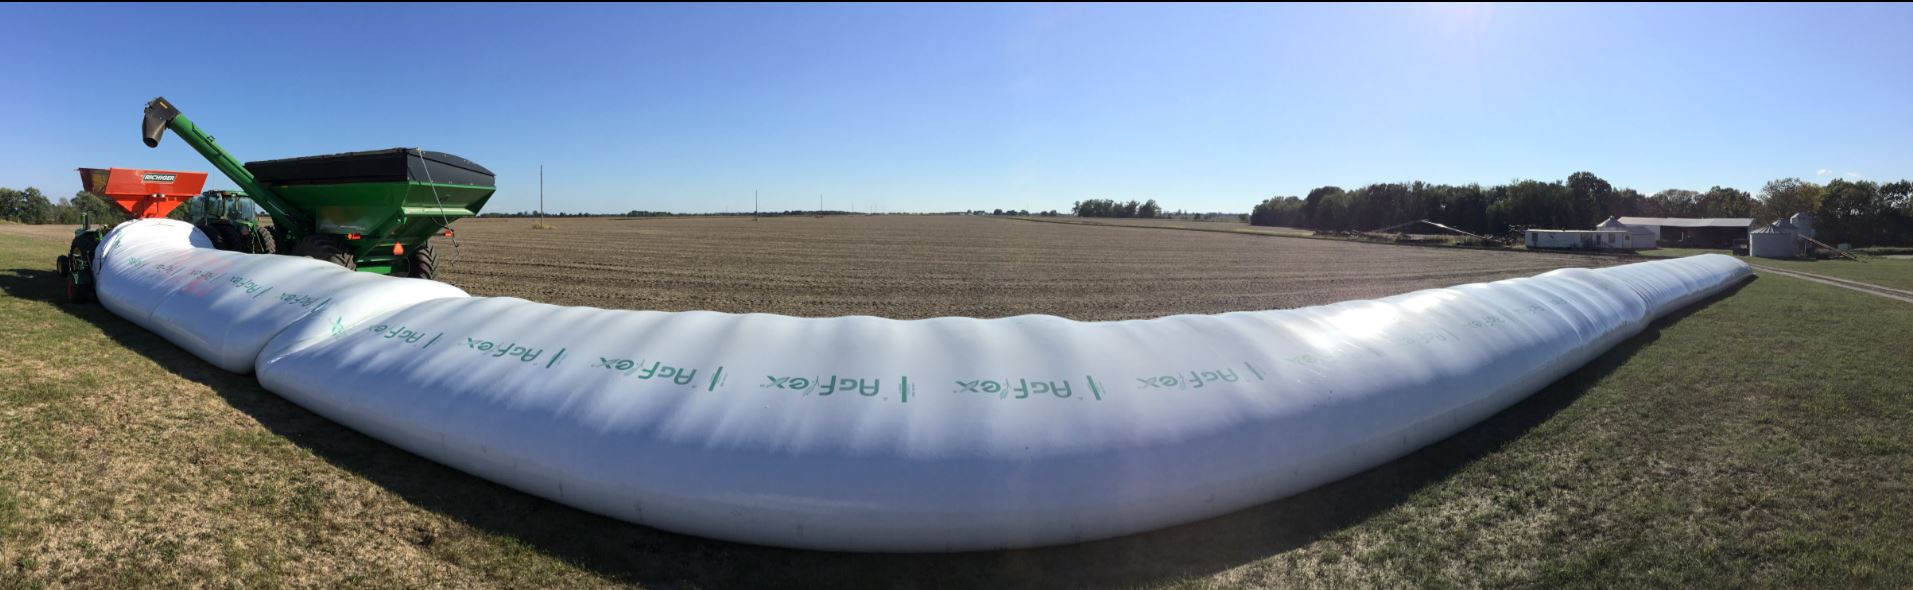 Richiger Grain Bag in Missouri